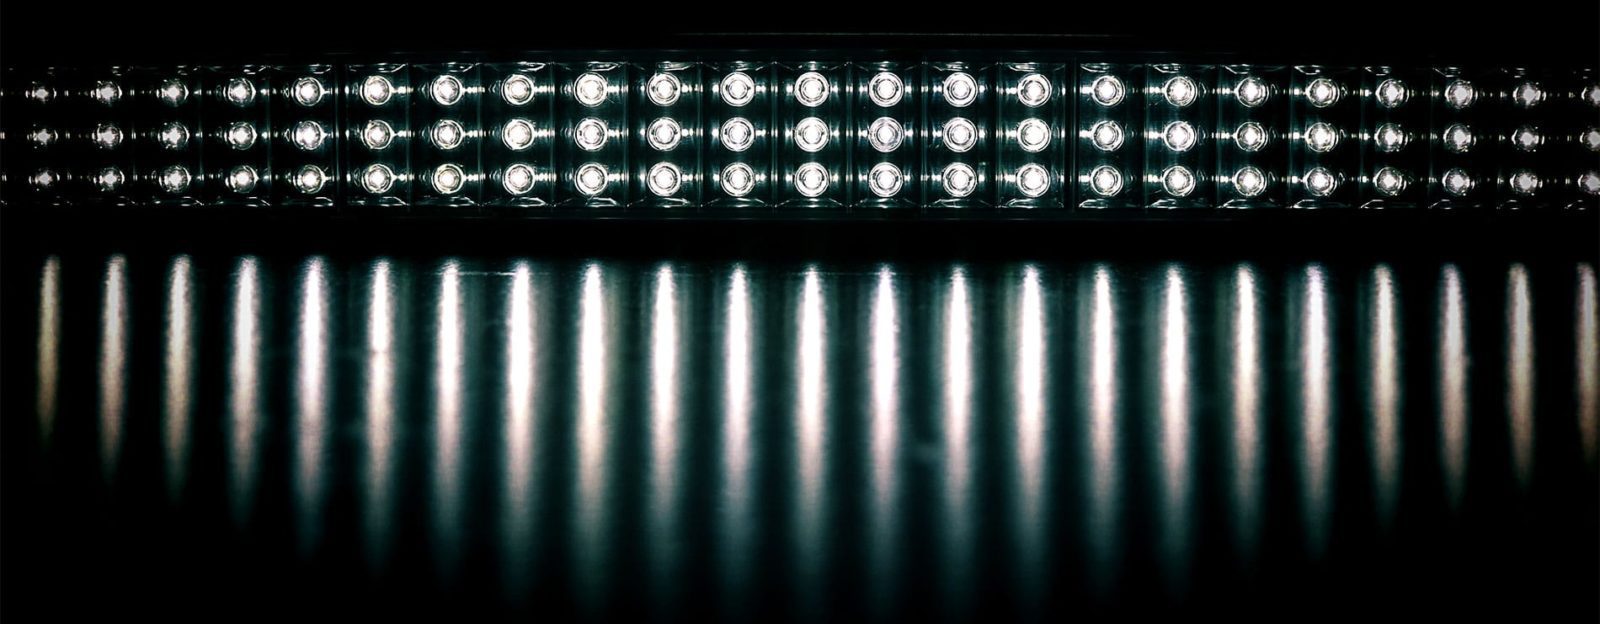 A row of illuminated LED lights.